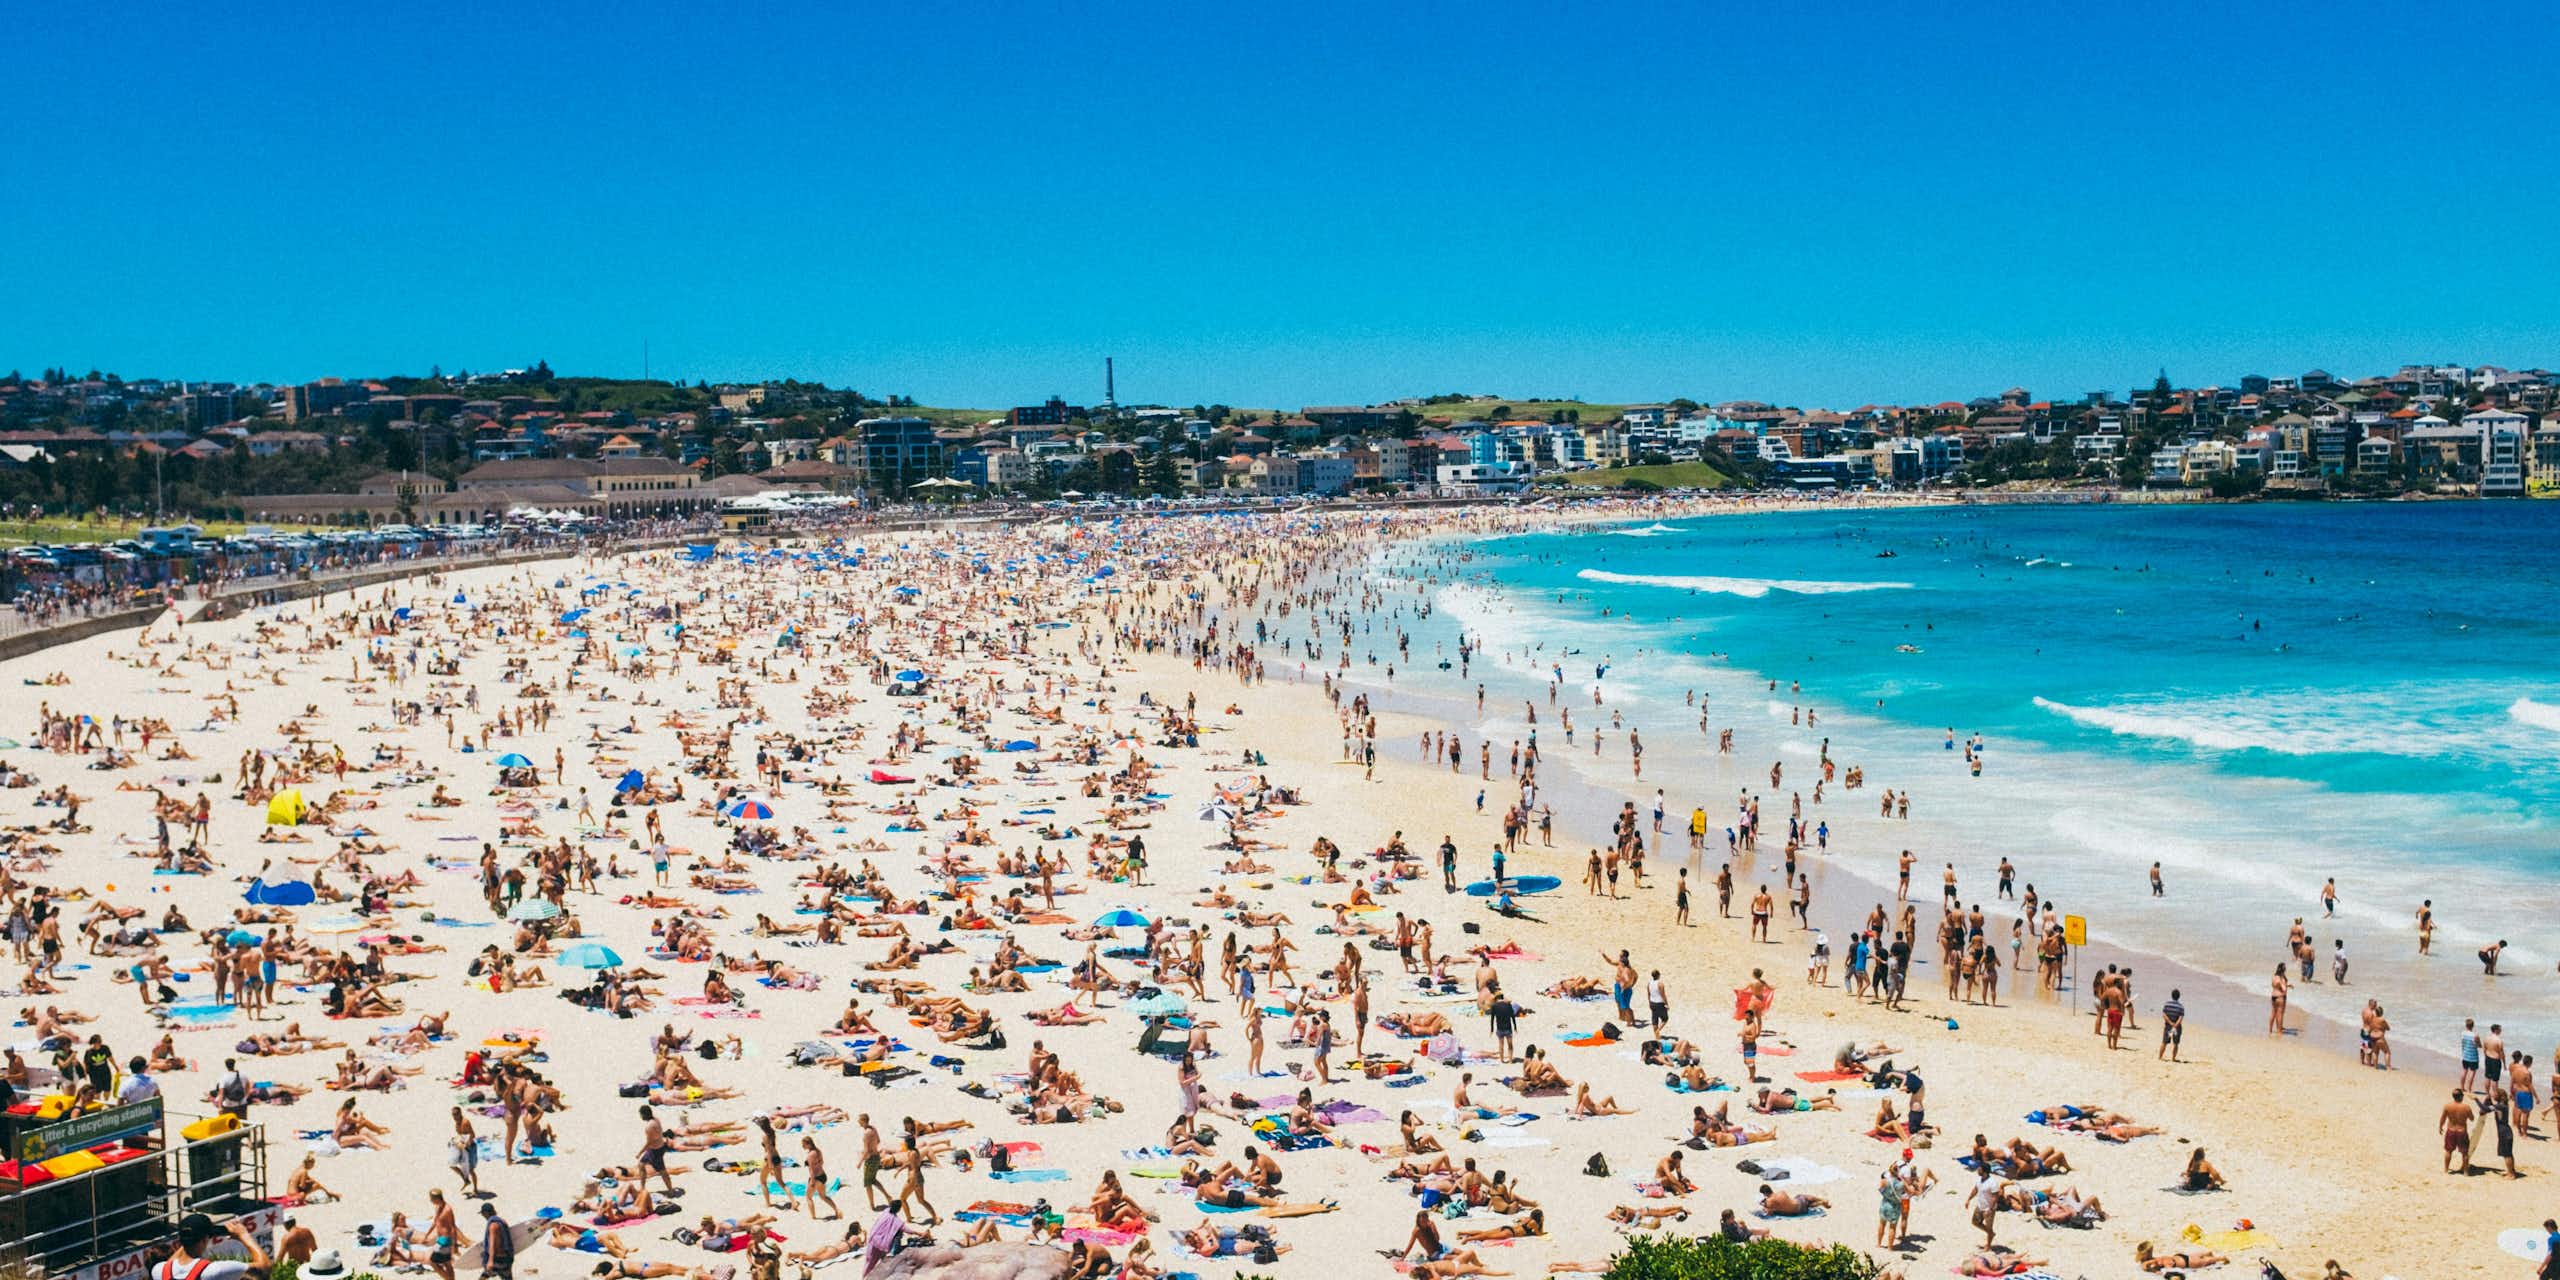 Sunbathers and swimmers on Bondi Beach on a sunny day in Sydney, Australia